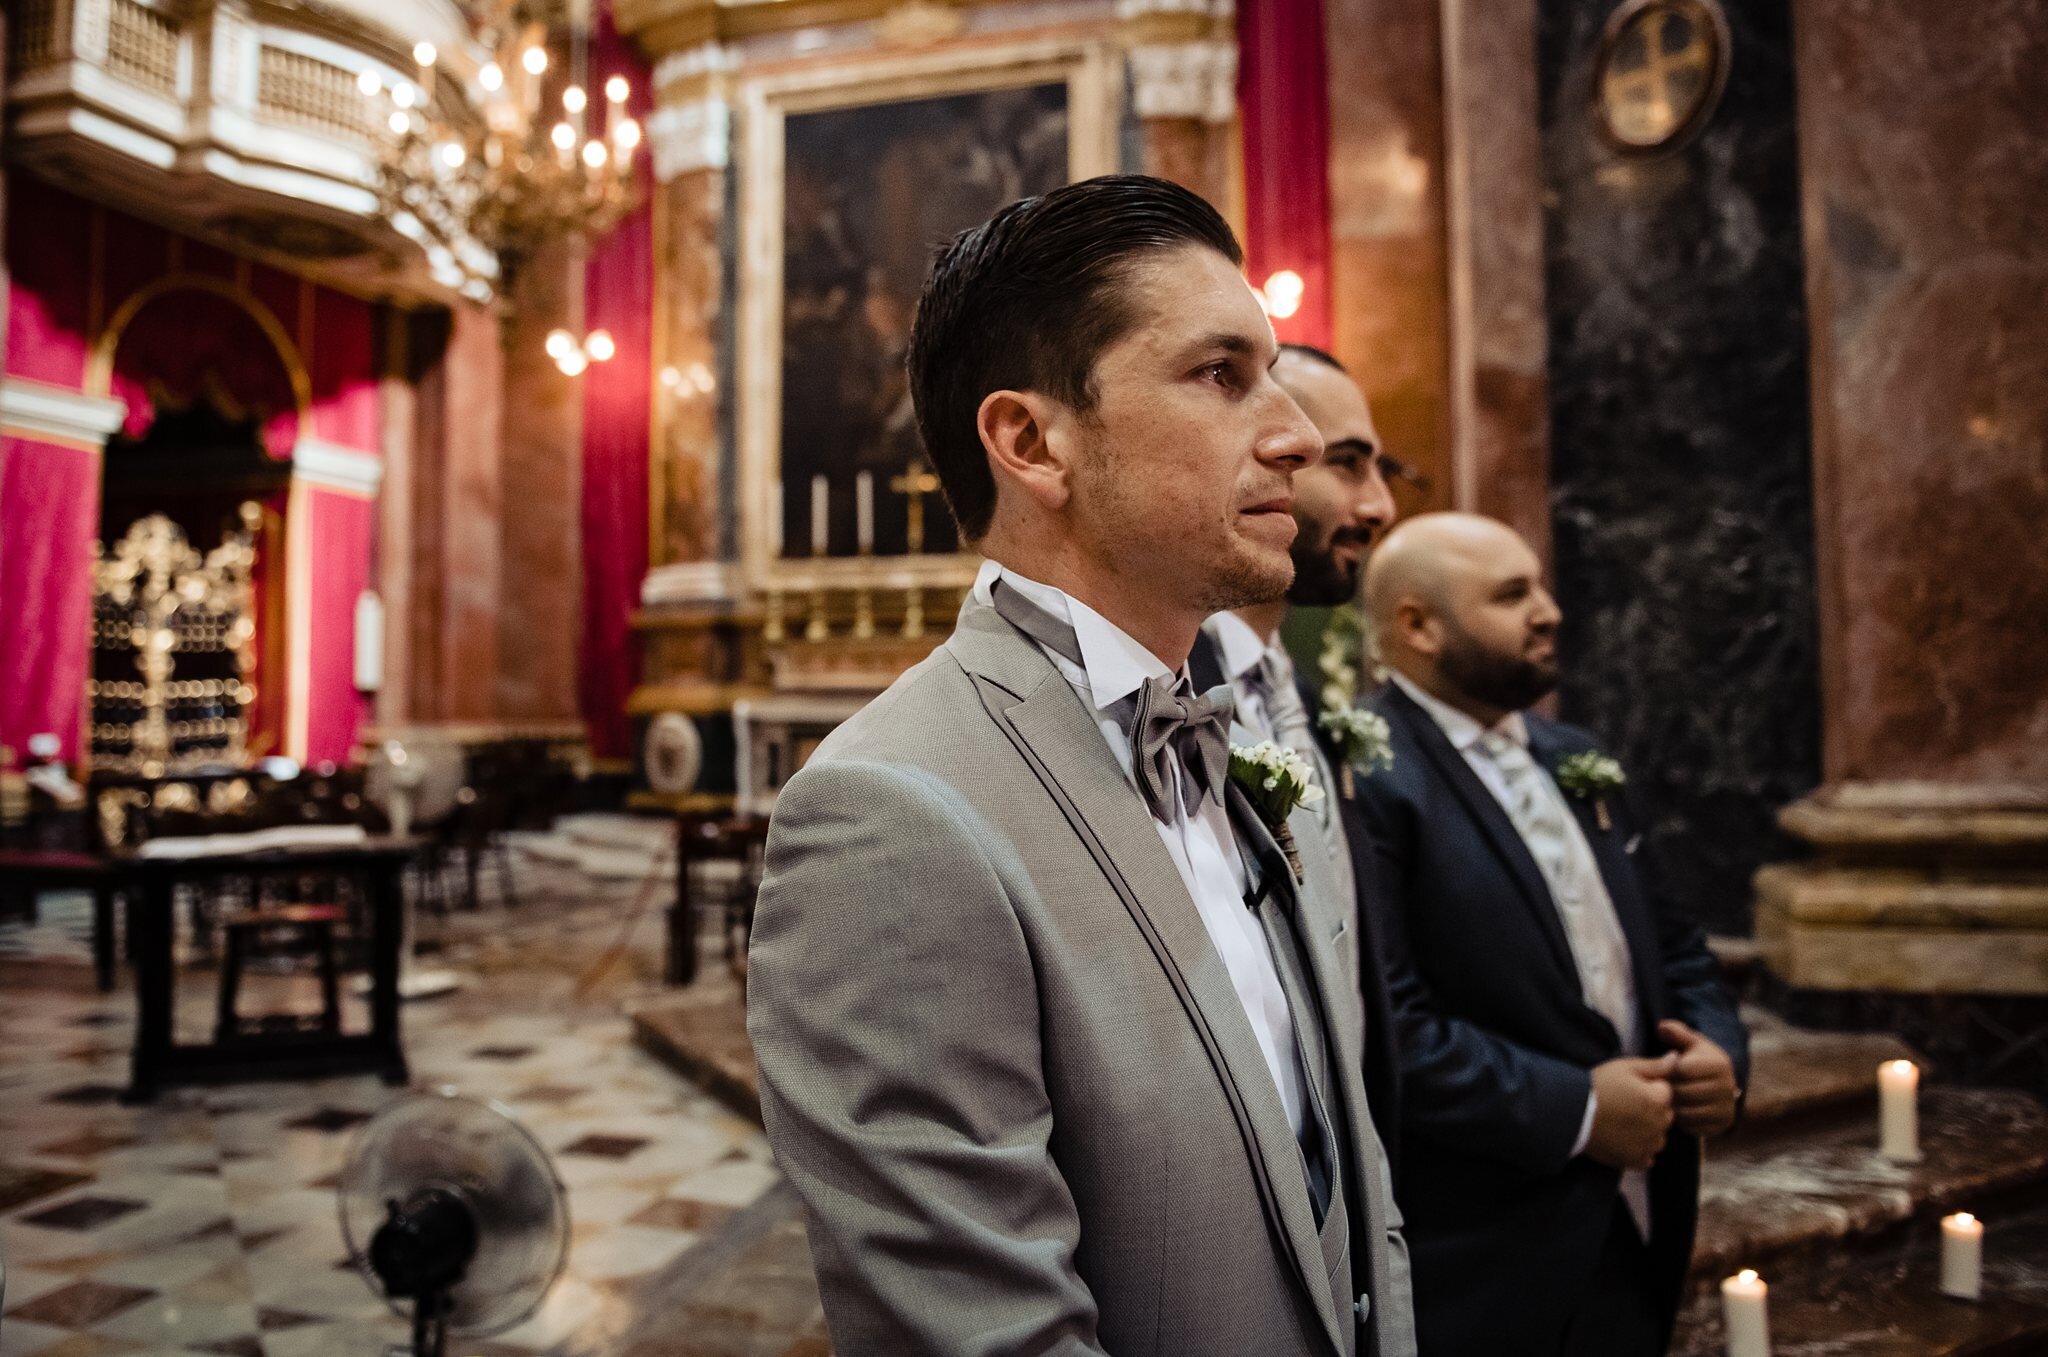 Mdina Cathedral Wedding Ceremony 